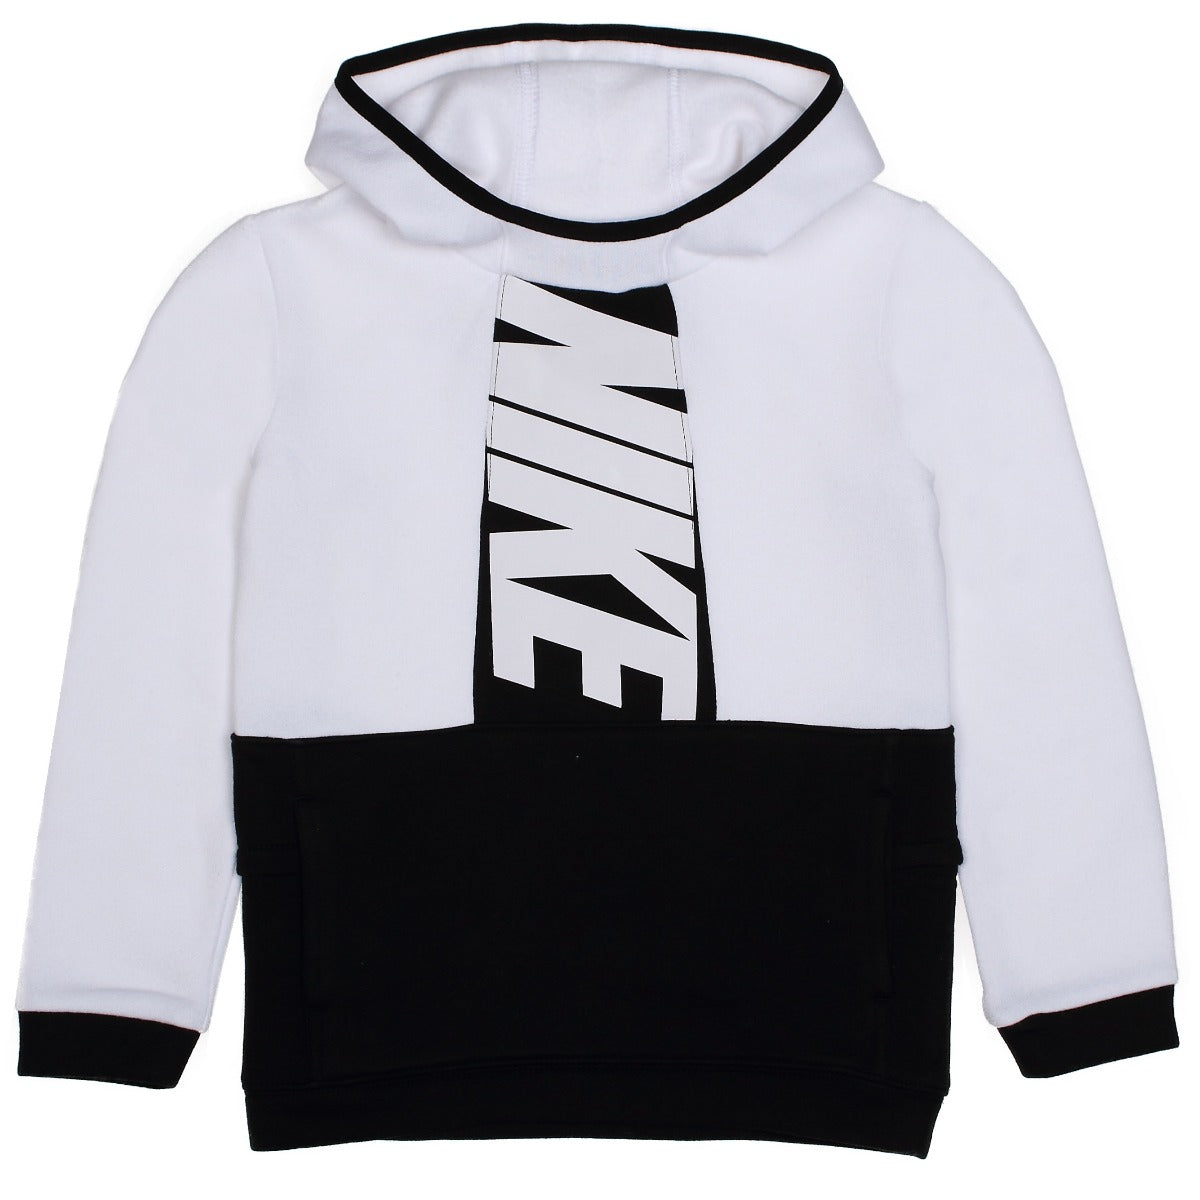 Nike Sportswear Ampliffy Kinder-Sweatshirt – Weiß/Schwarz